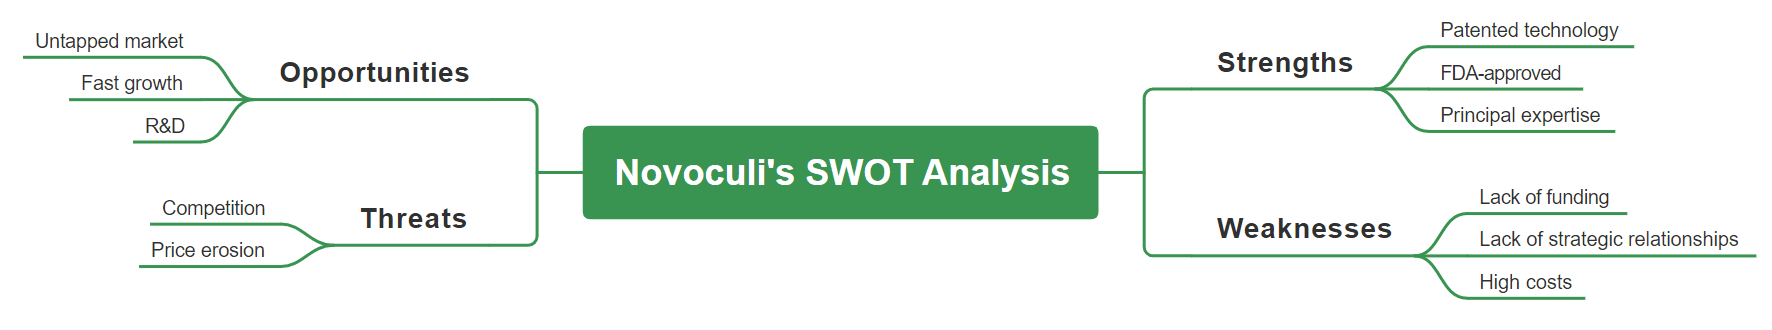 SWOT Analysis of Novoculi